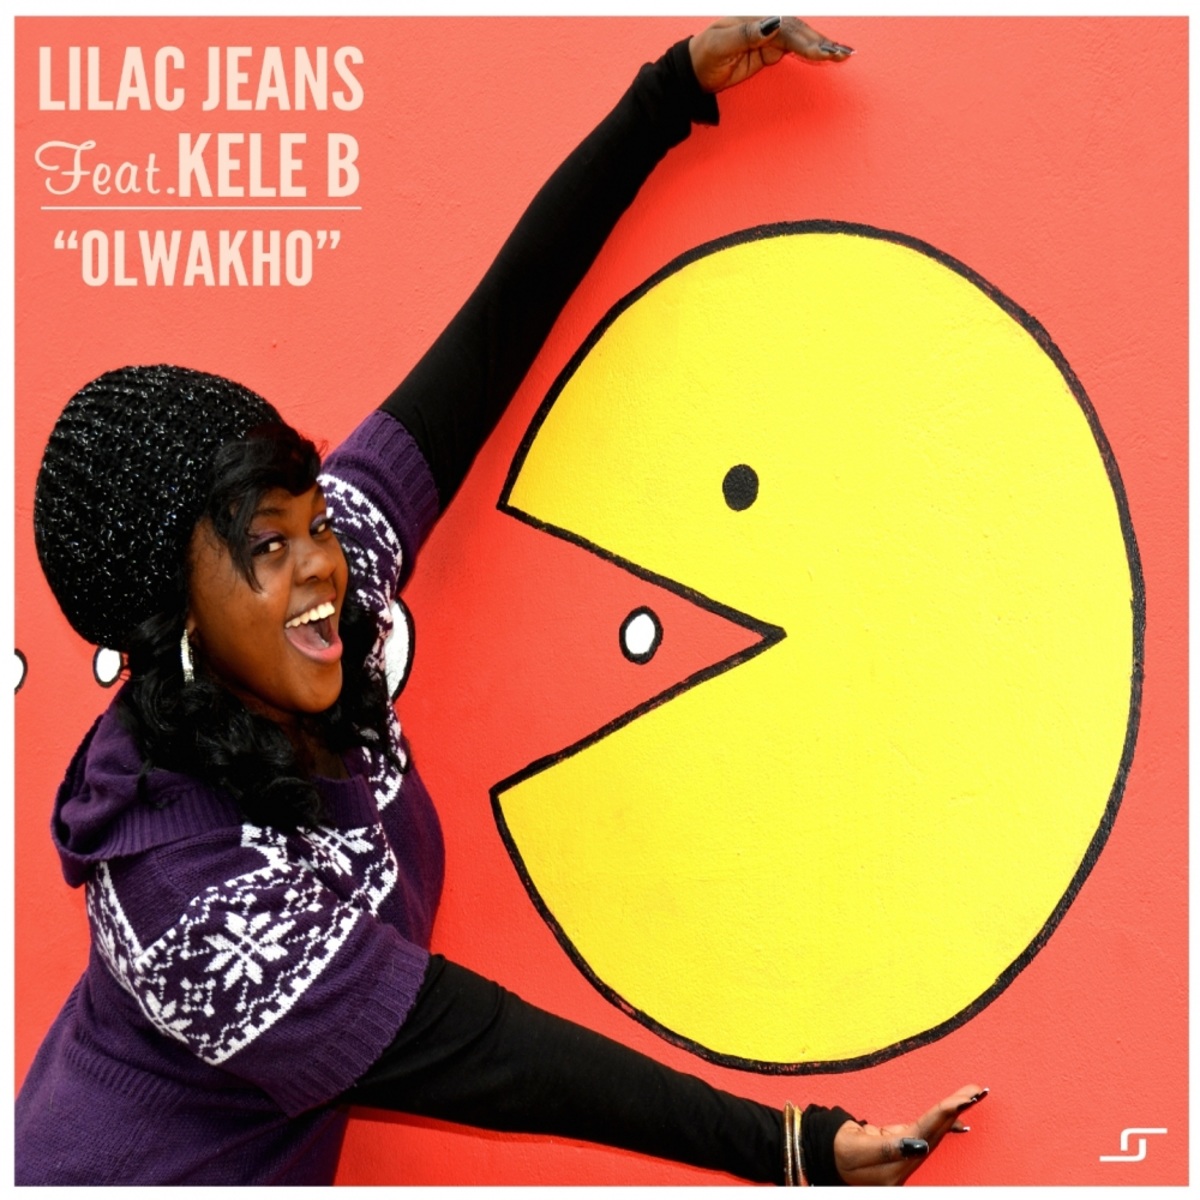 Lilac Jeans ft Kele B - Olwakho / Lilac Jeans Records